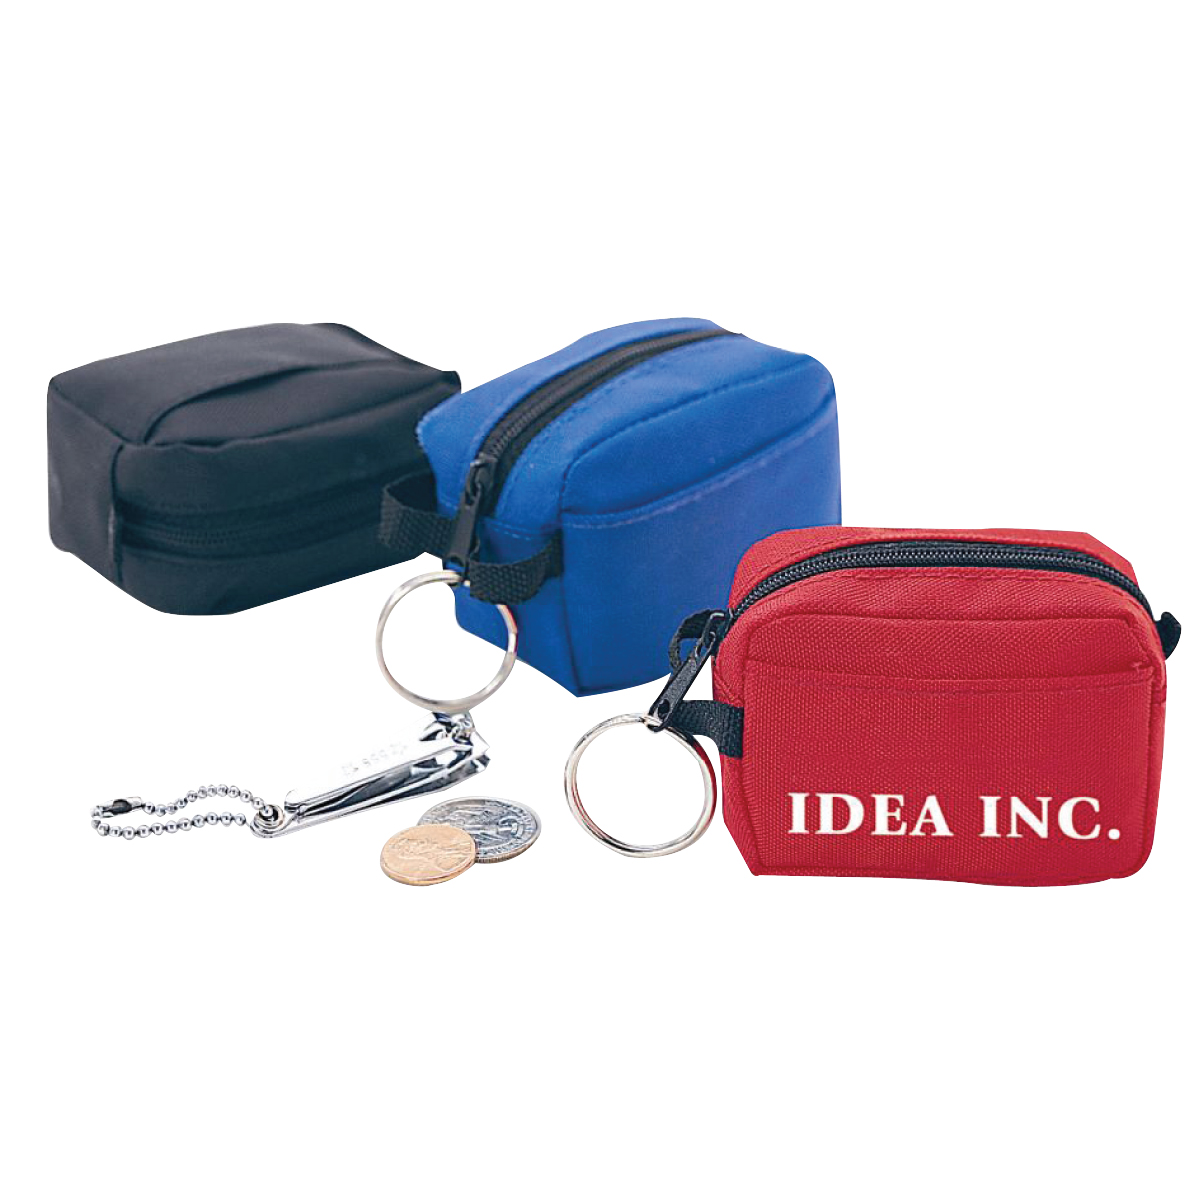 Mini keychain bag, faux - Gem